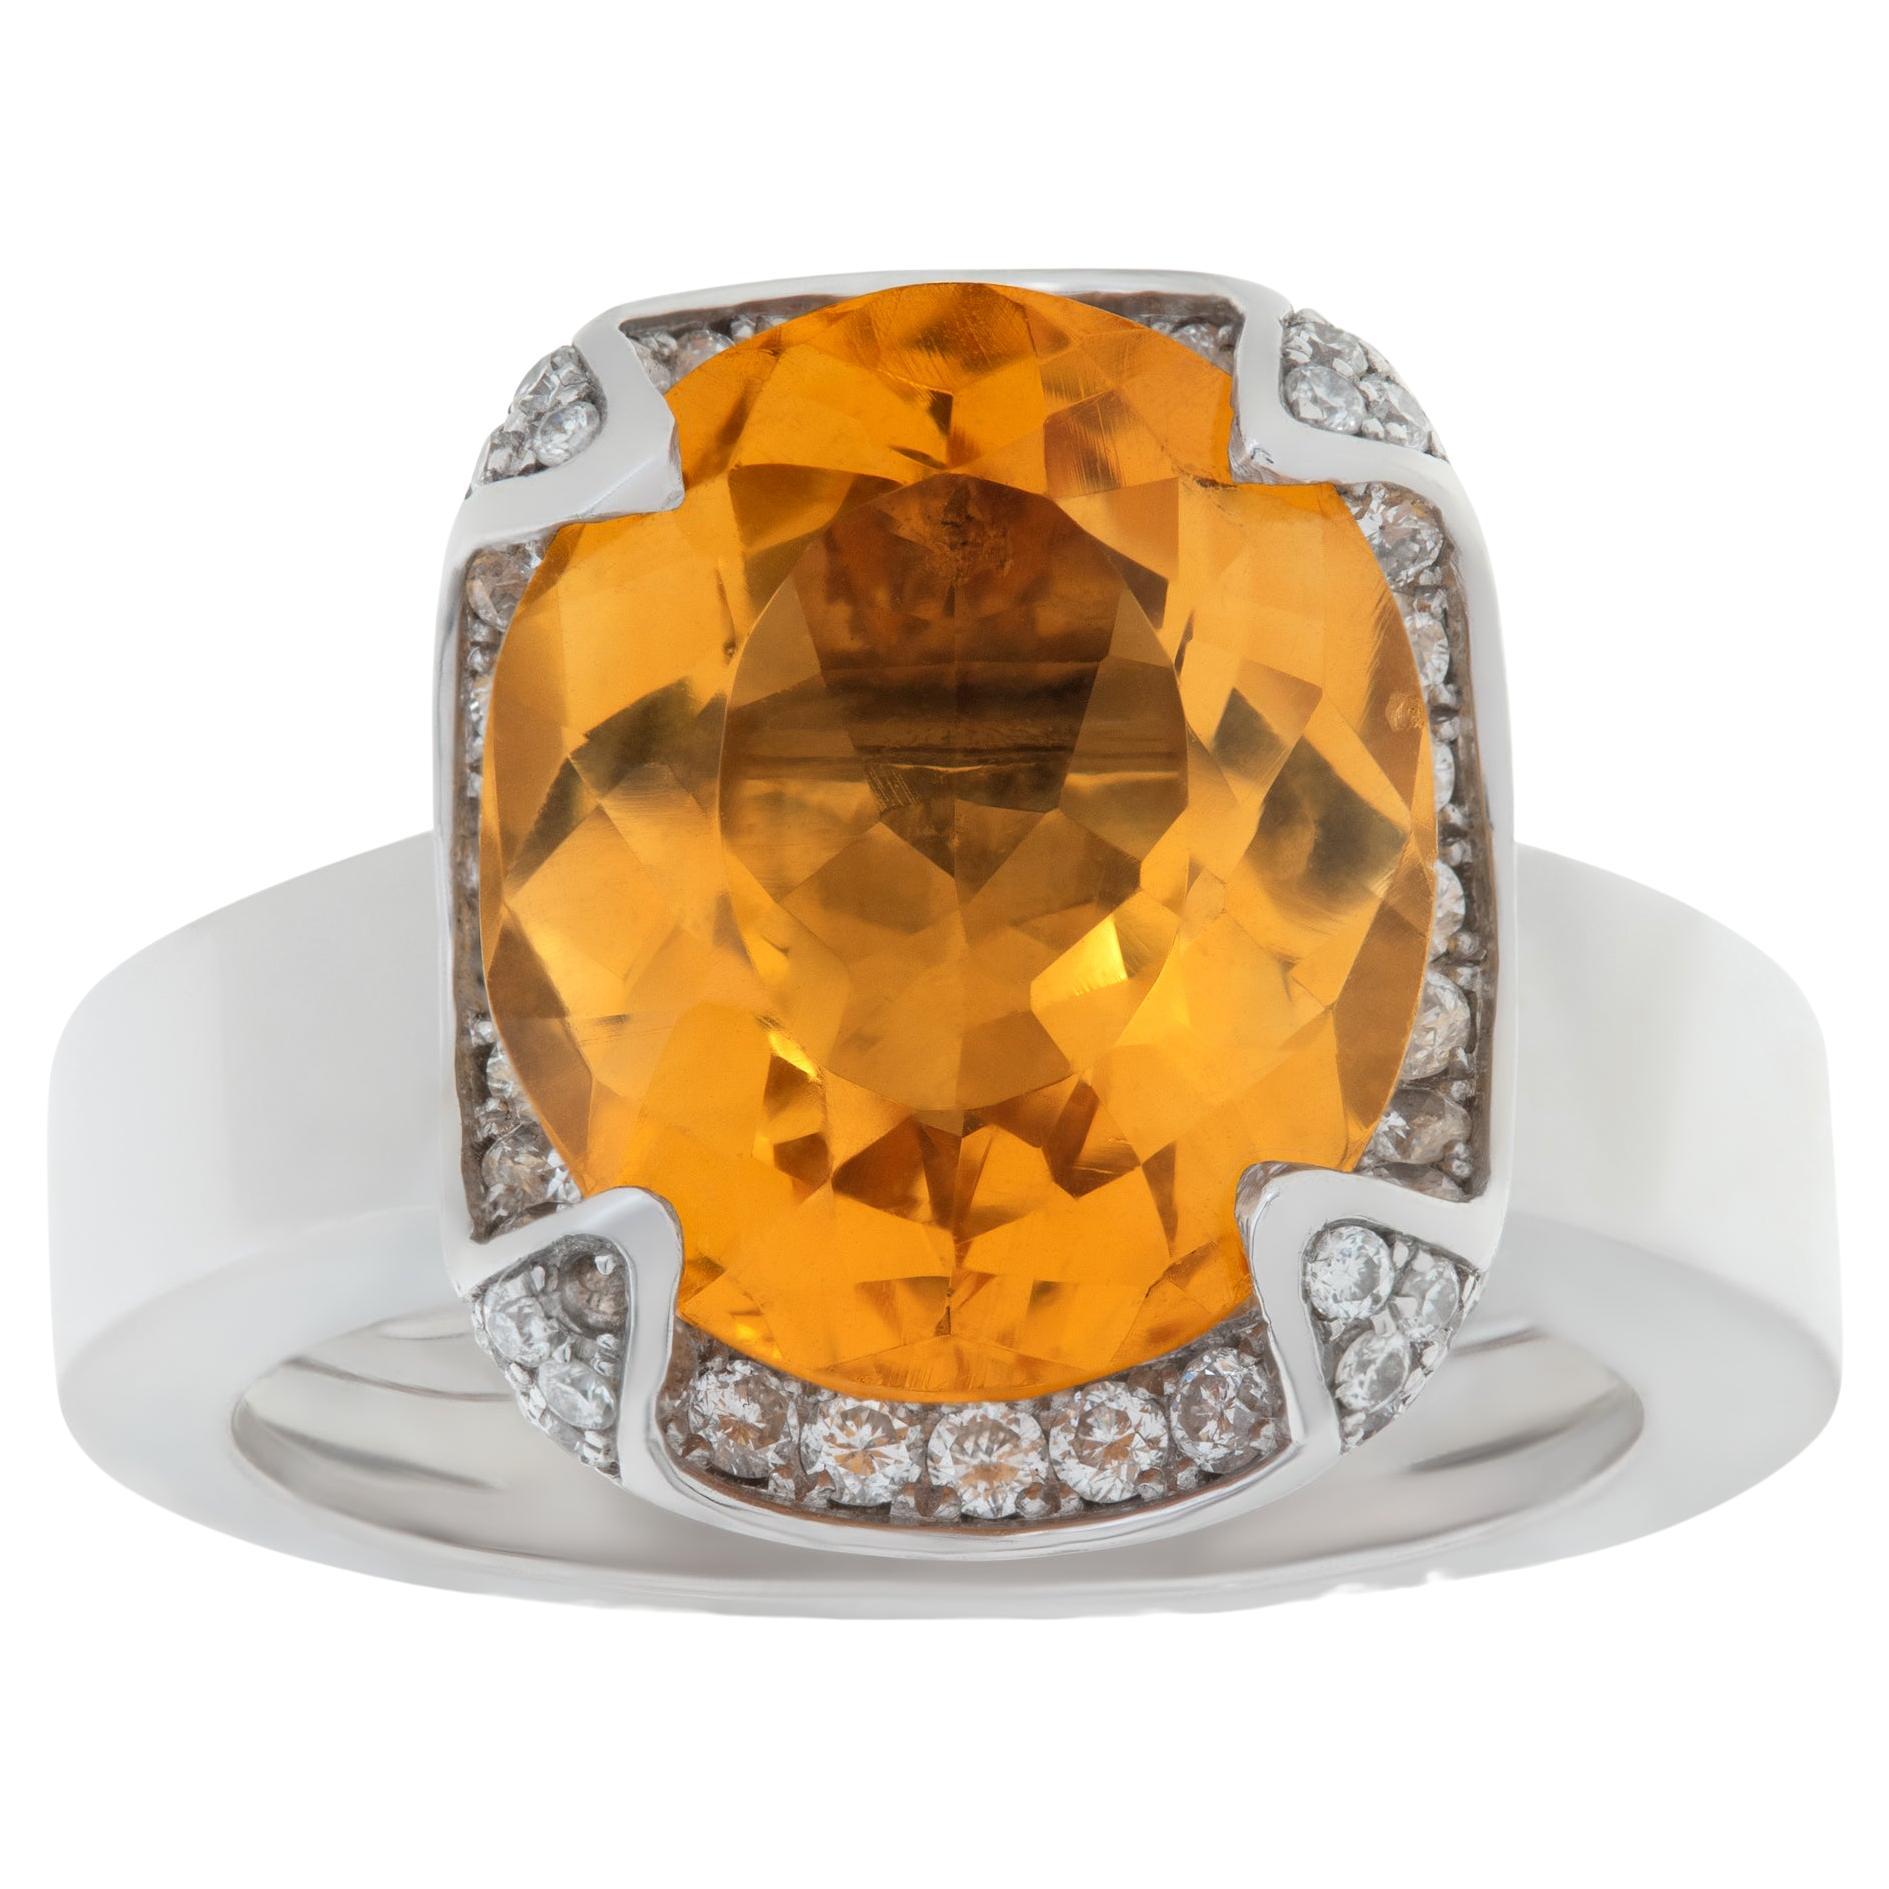 Orange topaz ring with diamond accents in 18k white gold